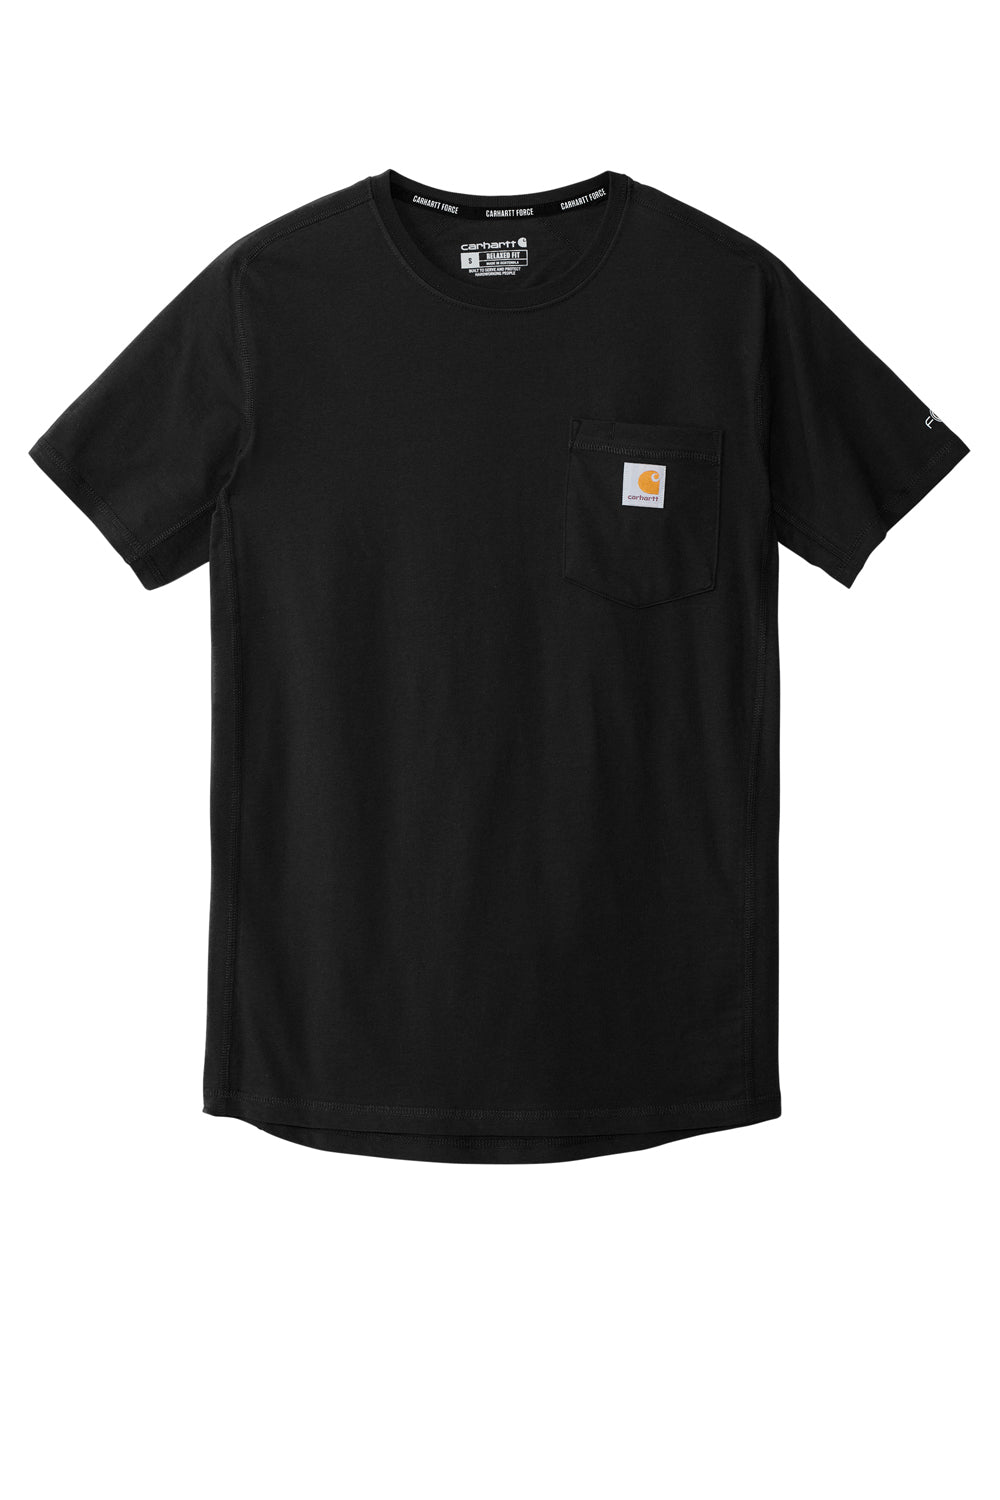 Carhartt CT104616 Mens Force Moisture Wicking Short Sleeve Crewneck T-Shirt w/ Pocket Black Flat Front